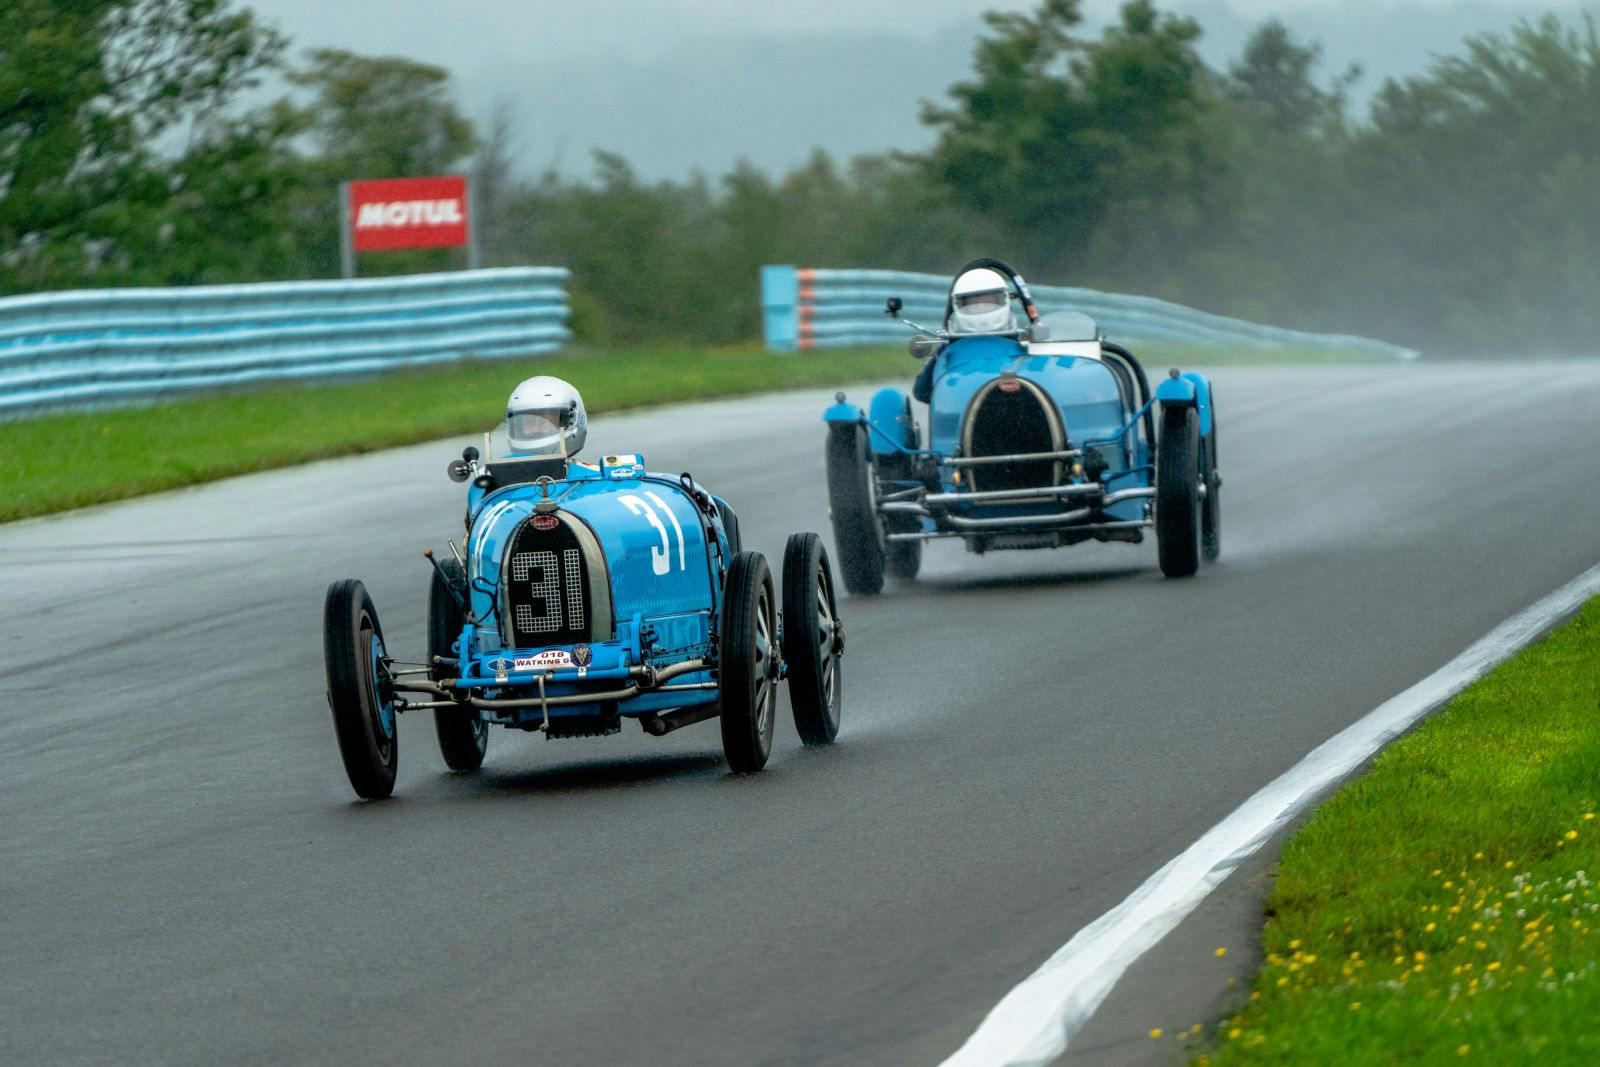 Victory in Class 3 went to a Type 37A at the 2022 U.S. Bugatti Grand Prix.